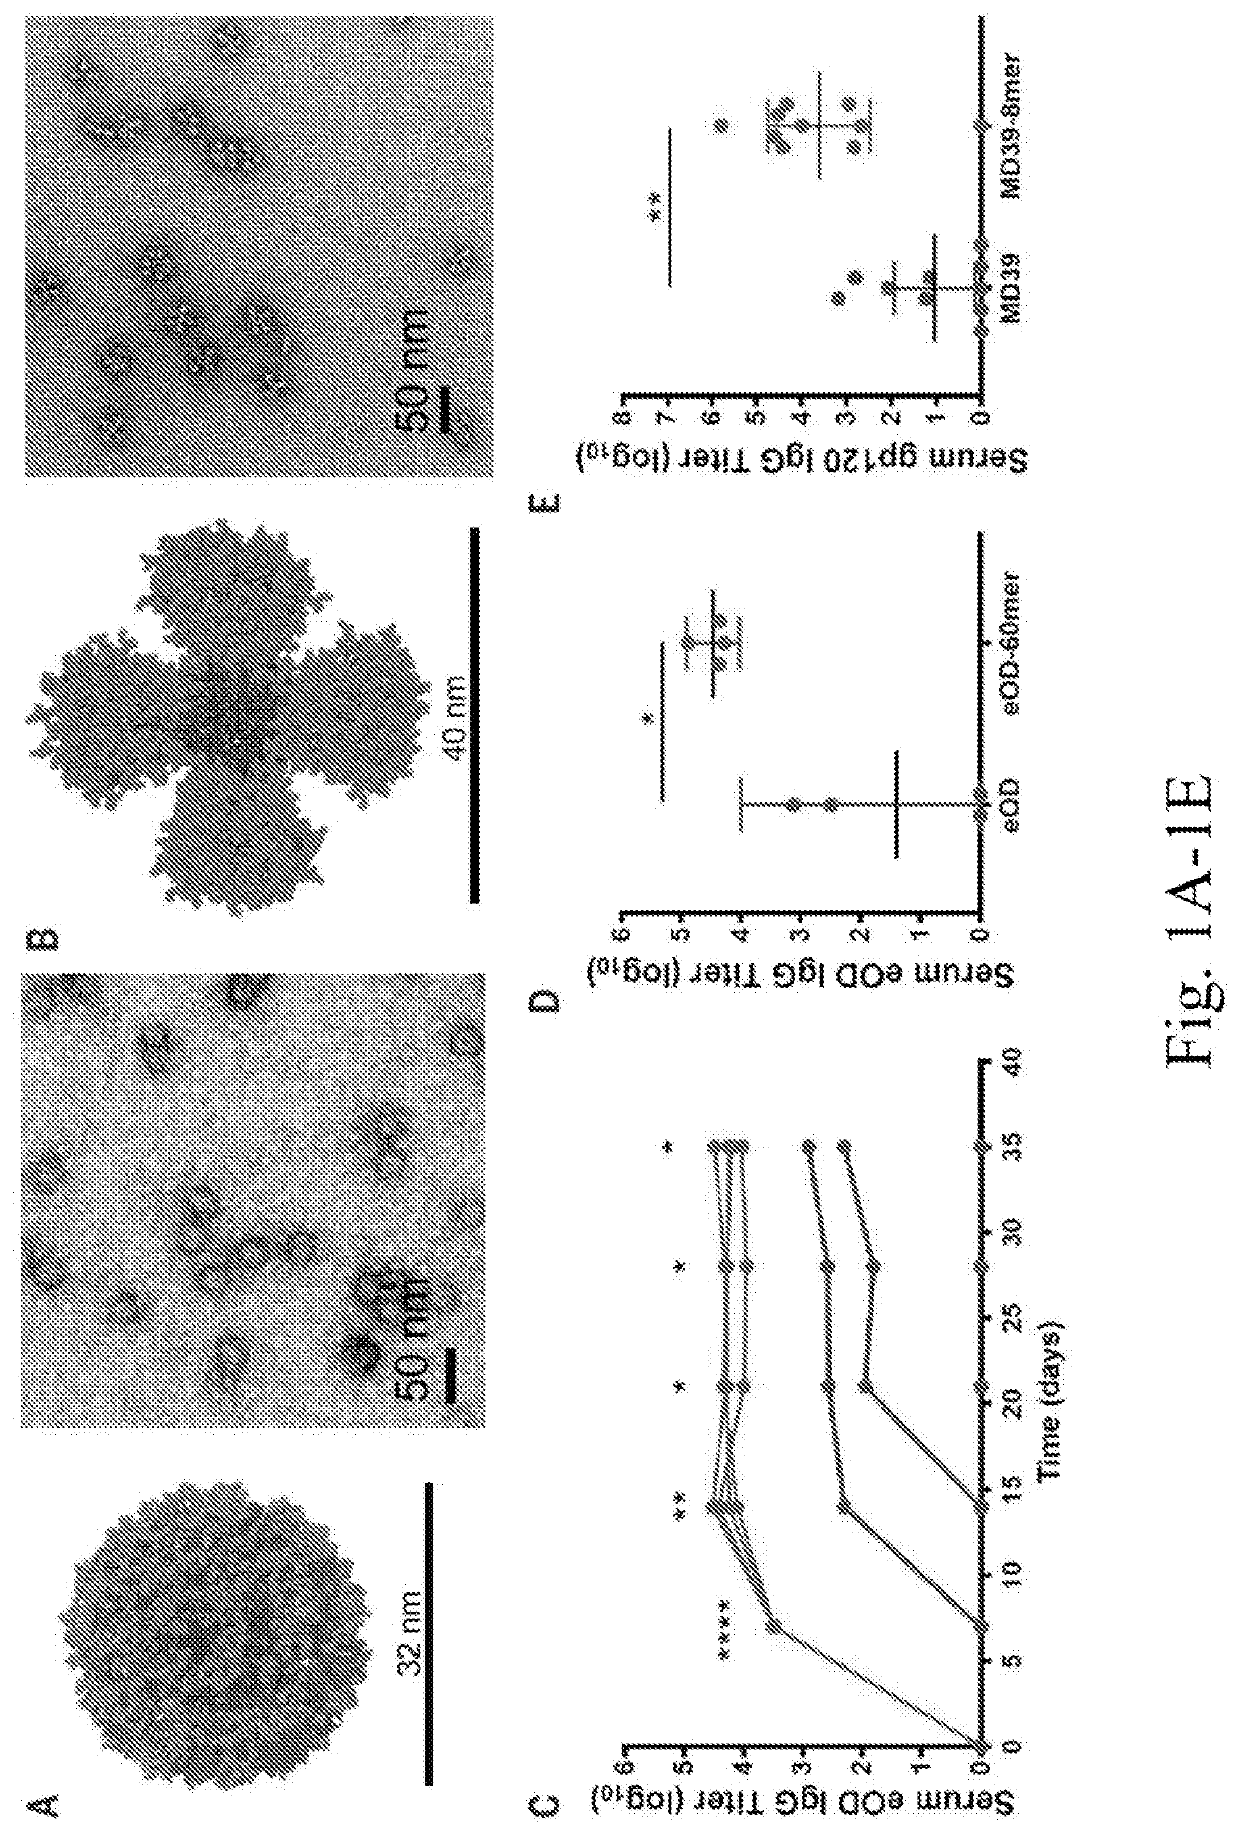 Ferritin nanoparticle displaying an HIV trimer